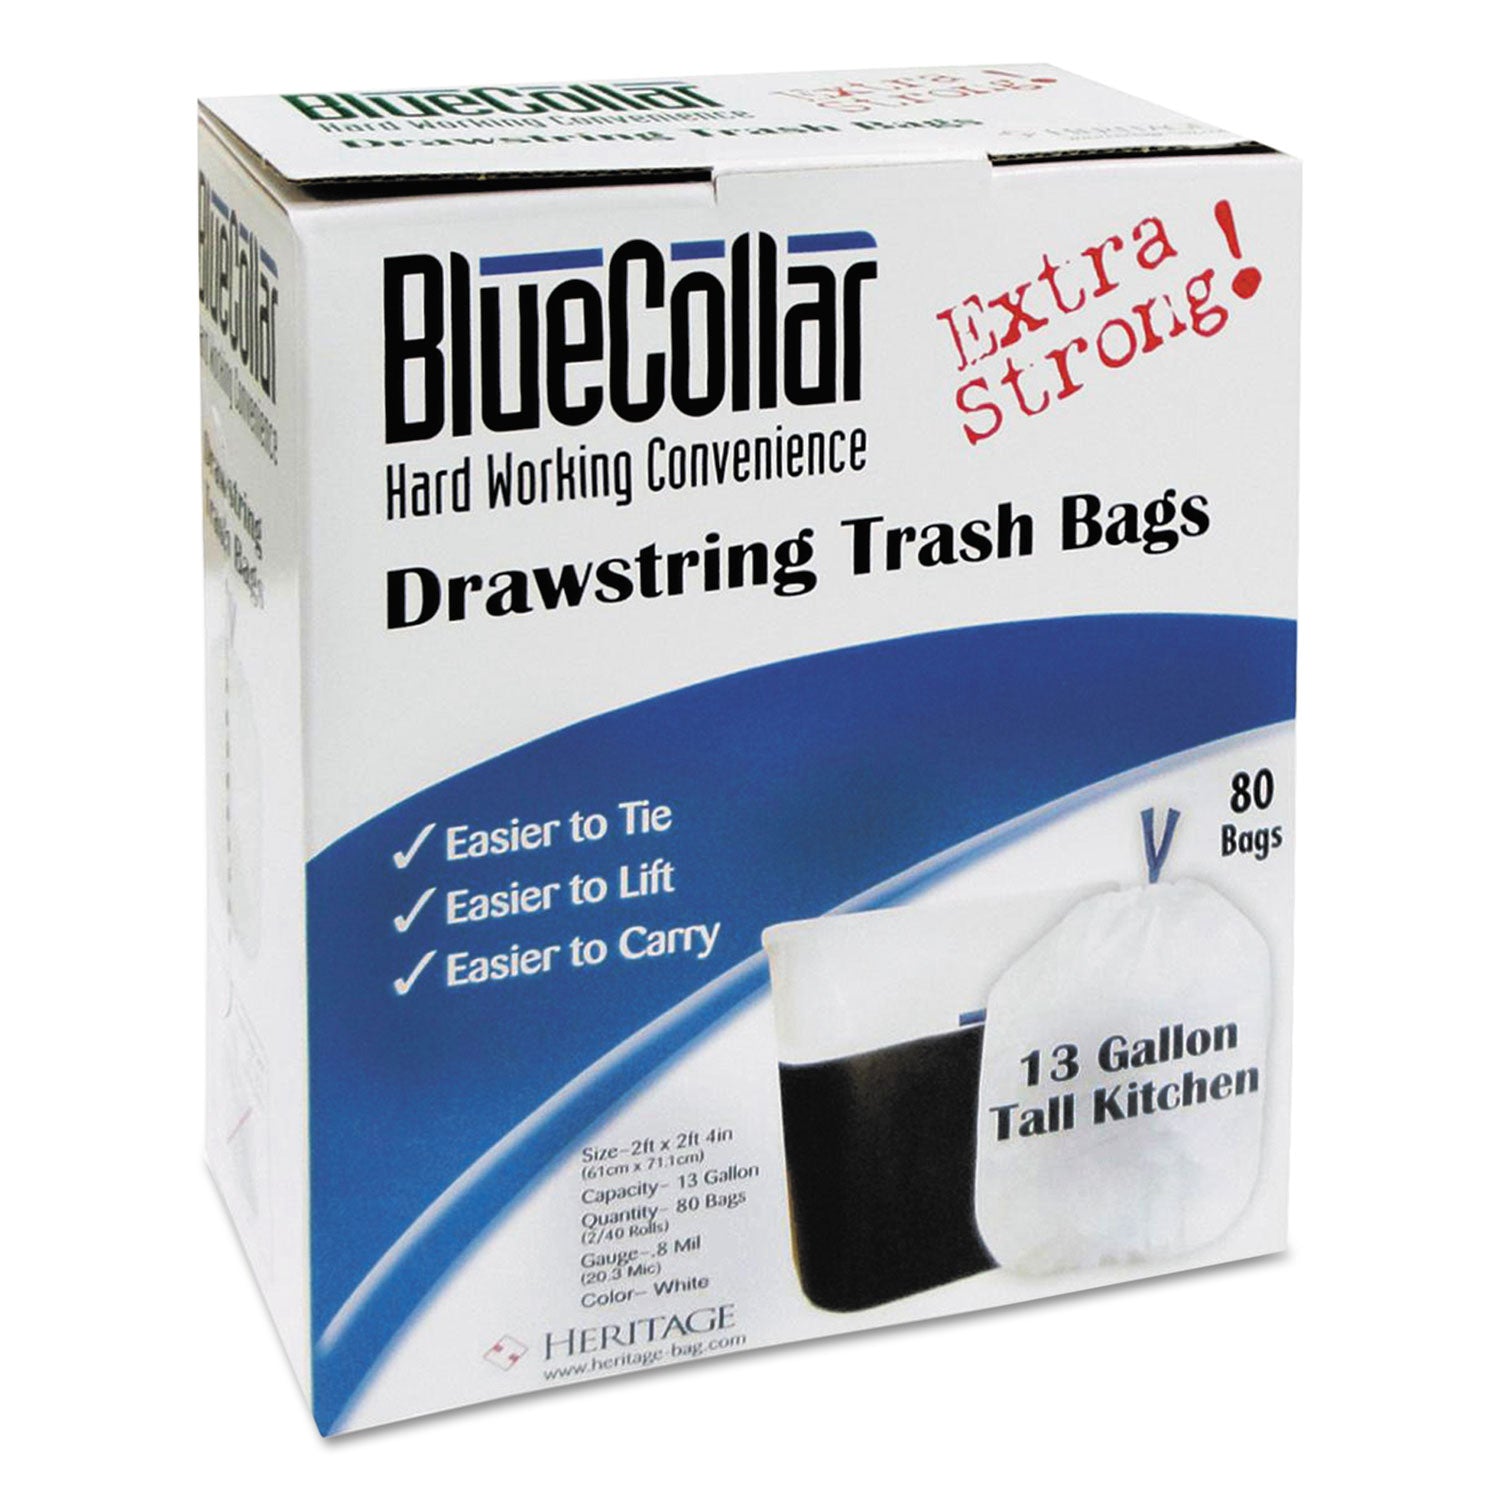 Drawstring Trash Bags, 13 gal, 0.8 mil, 24" x 28", White, 80 Bags/Box, 6 Boxes/Carton - 